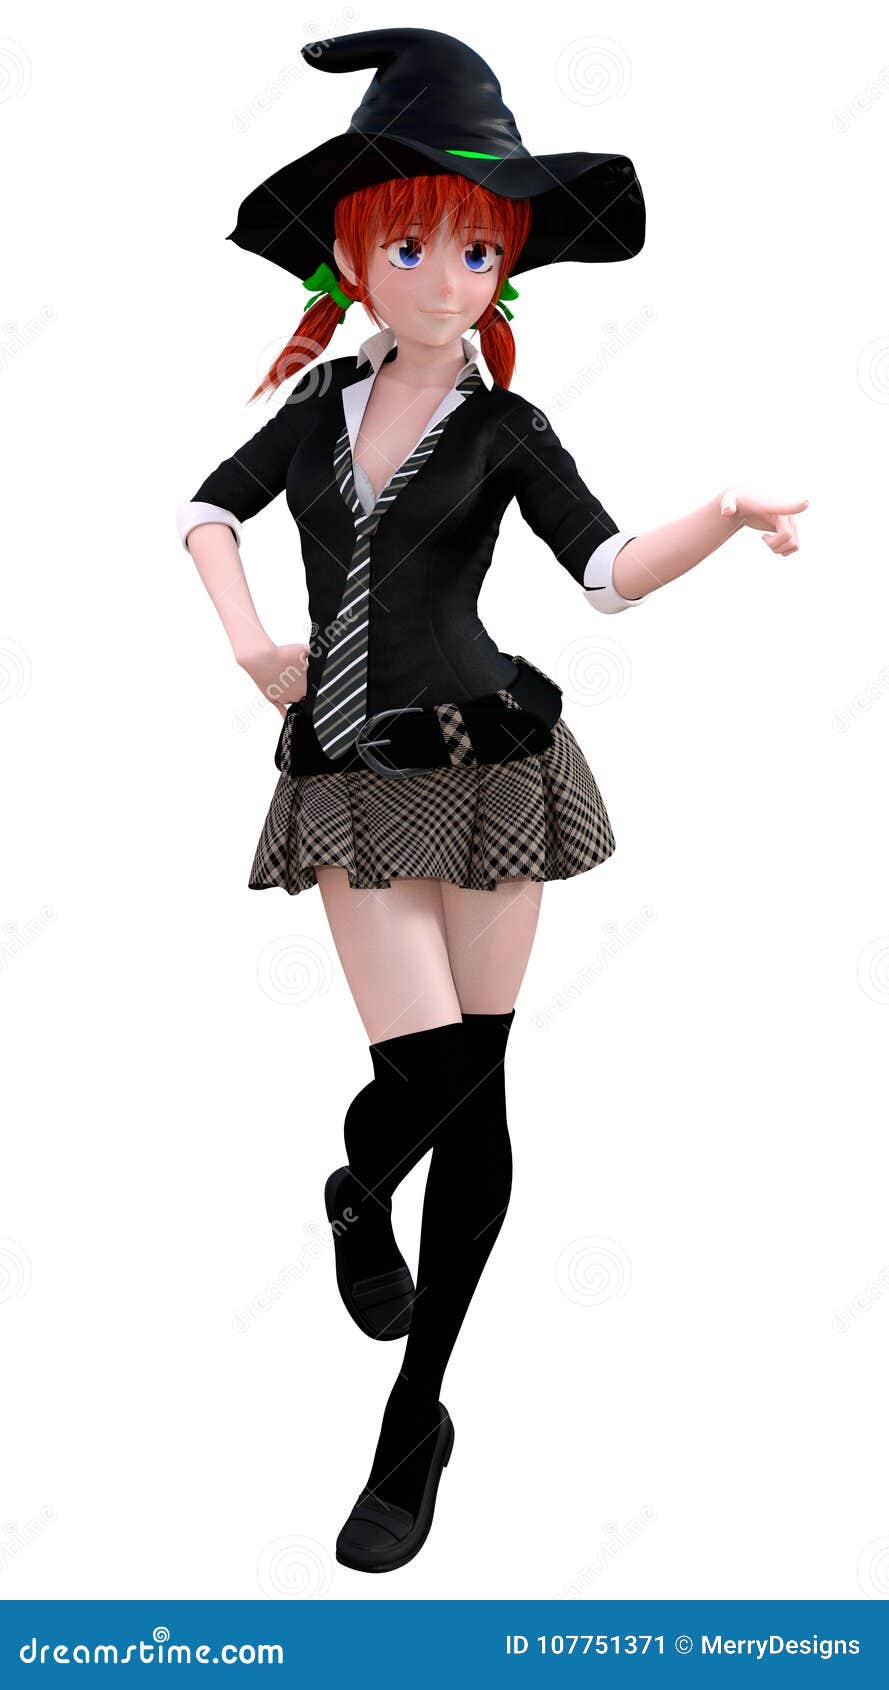 Micro Mini Skirt Japanese Extra Short Sexy Lingerie Anime Costume Ahegao  Printed  eBay